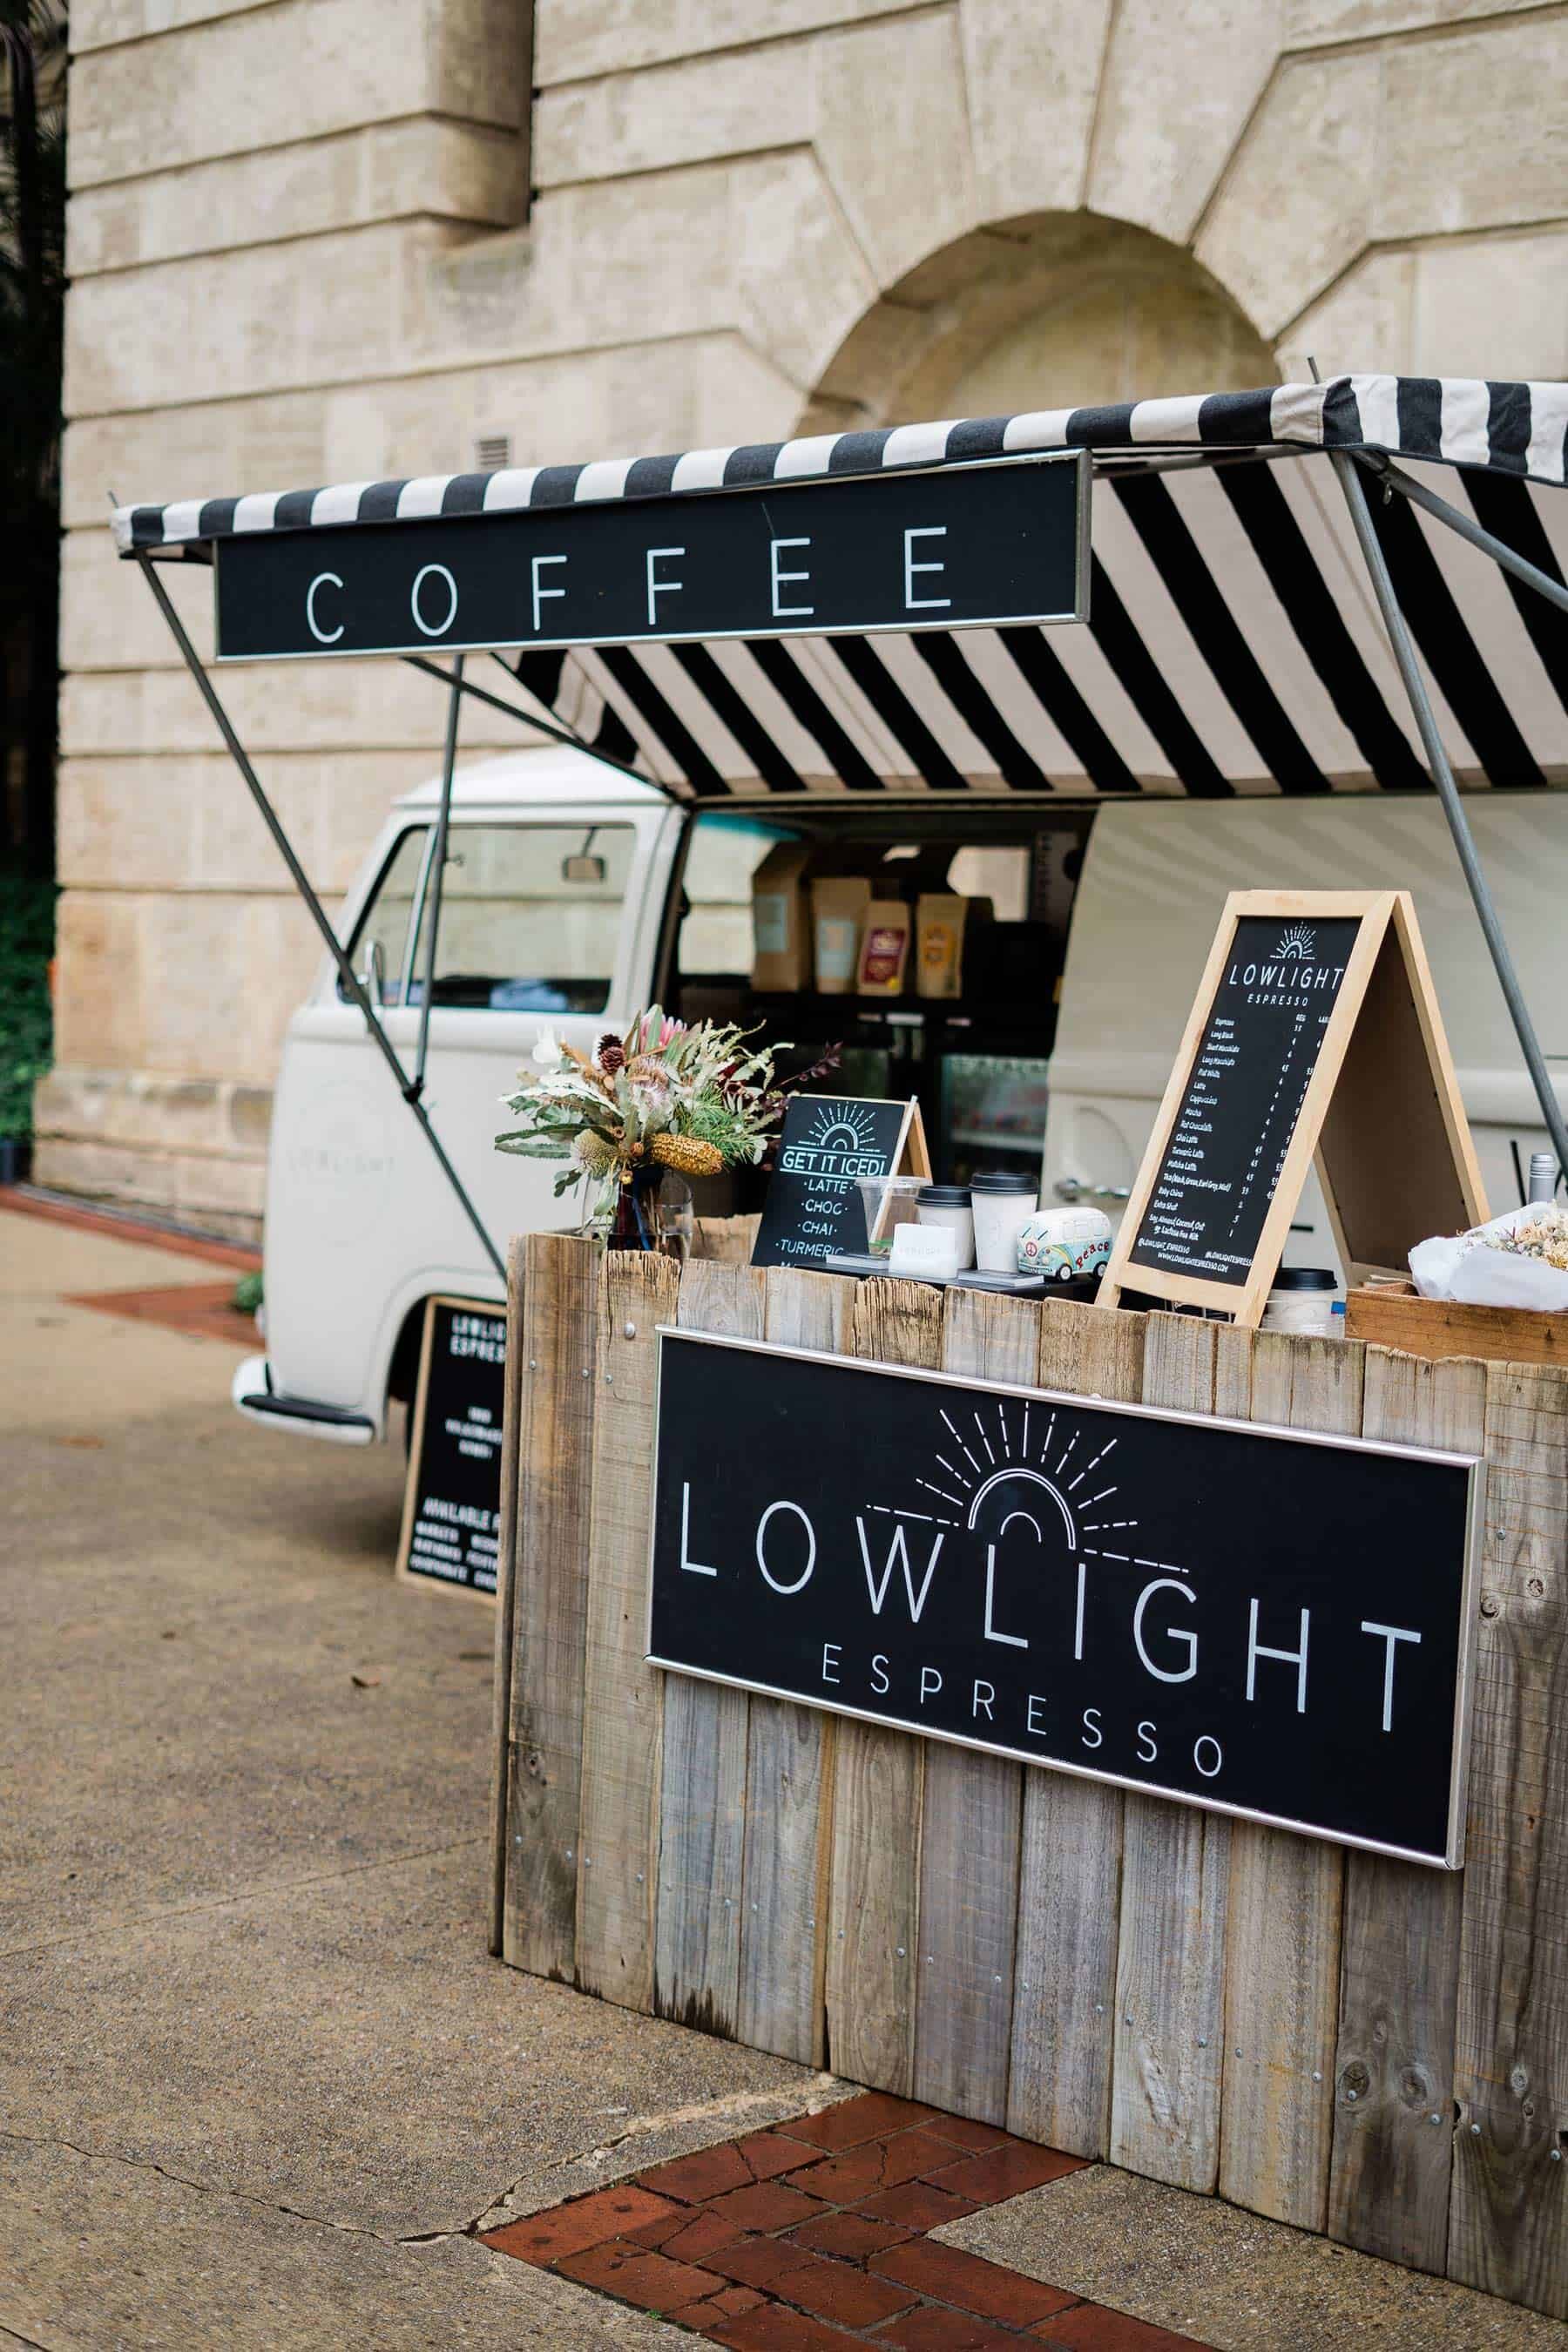 Perth mobile coffee van Lowlight Espresso